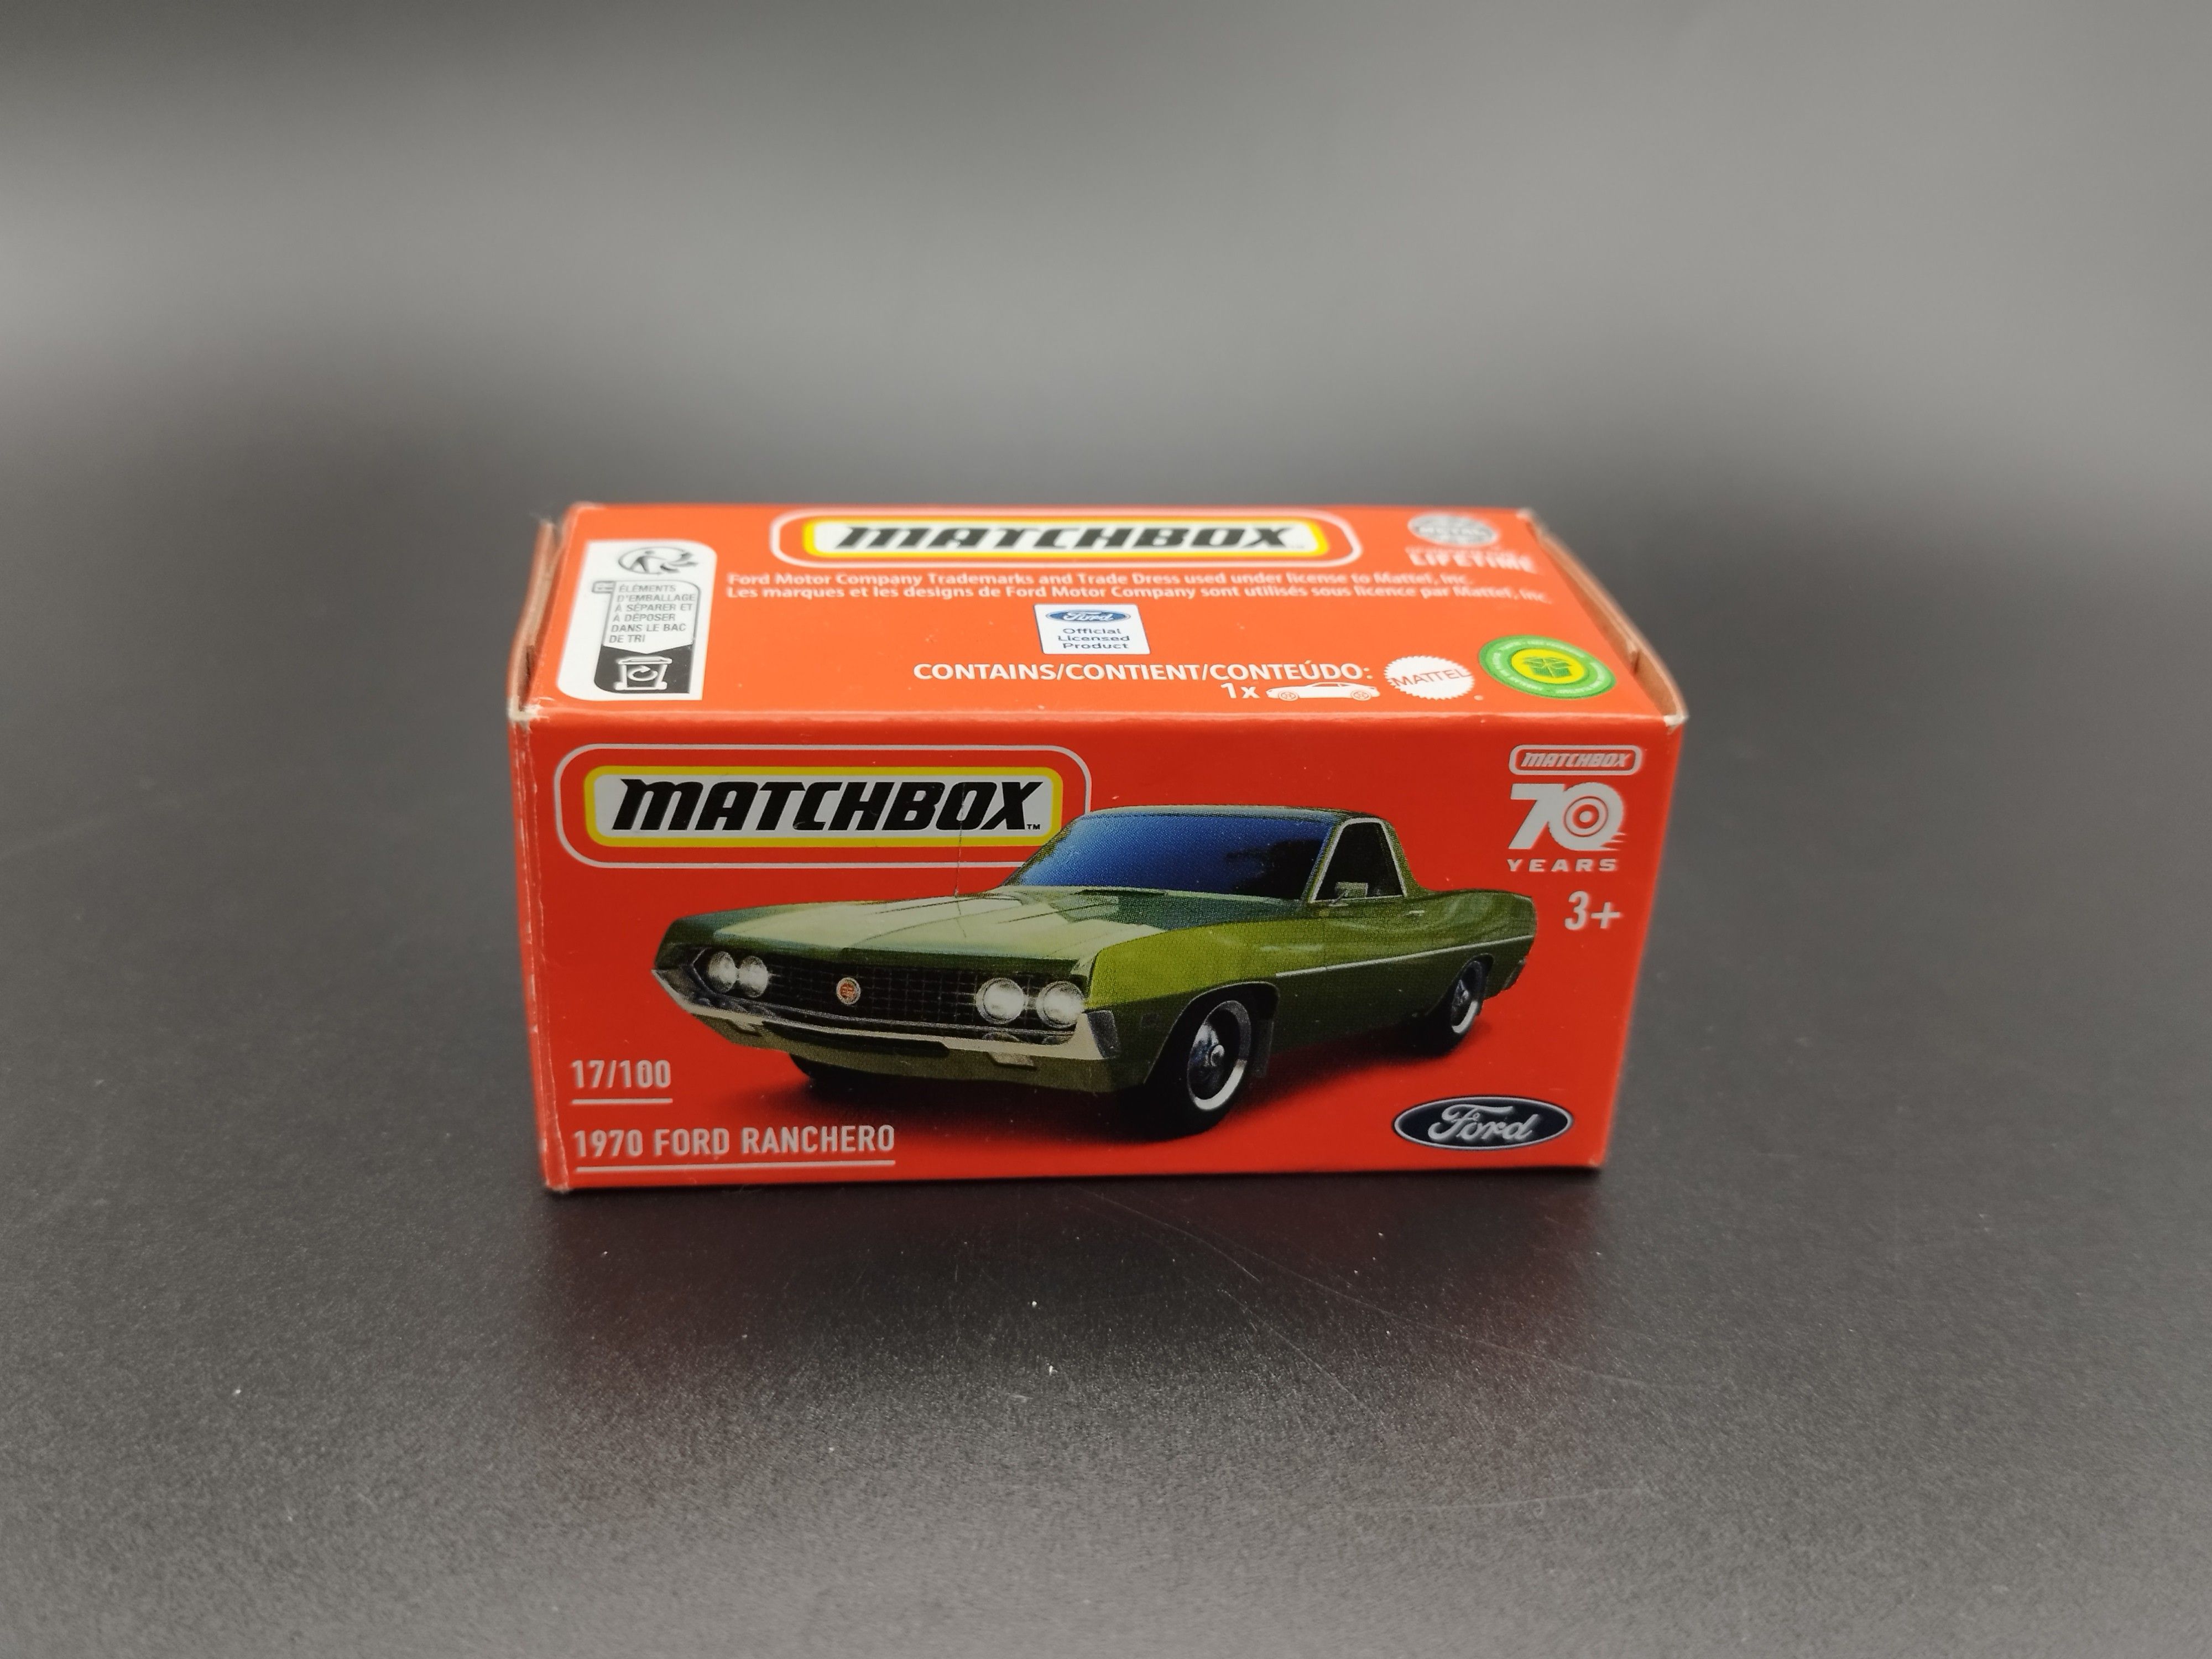 Matchbox 1970 Ford Ranchero model